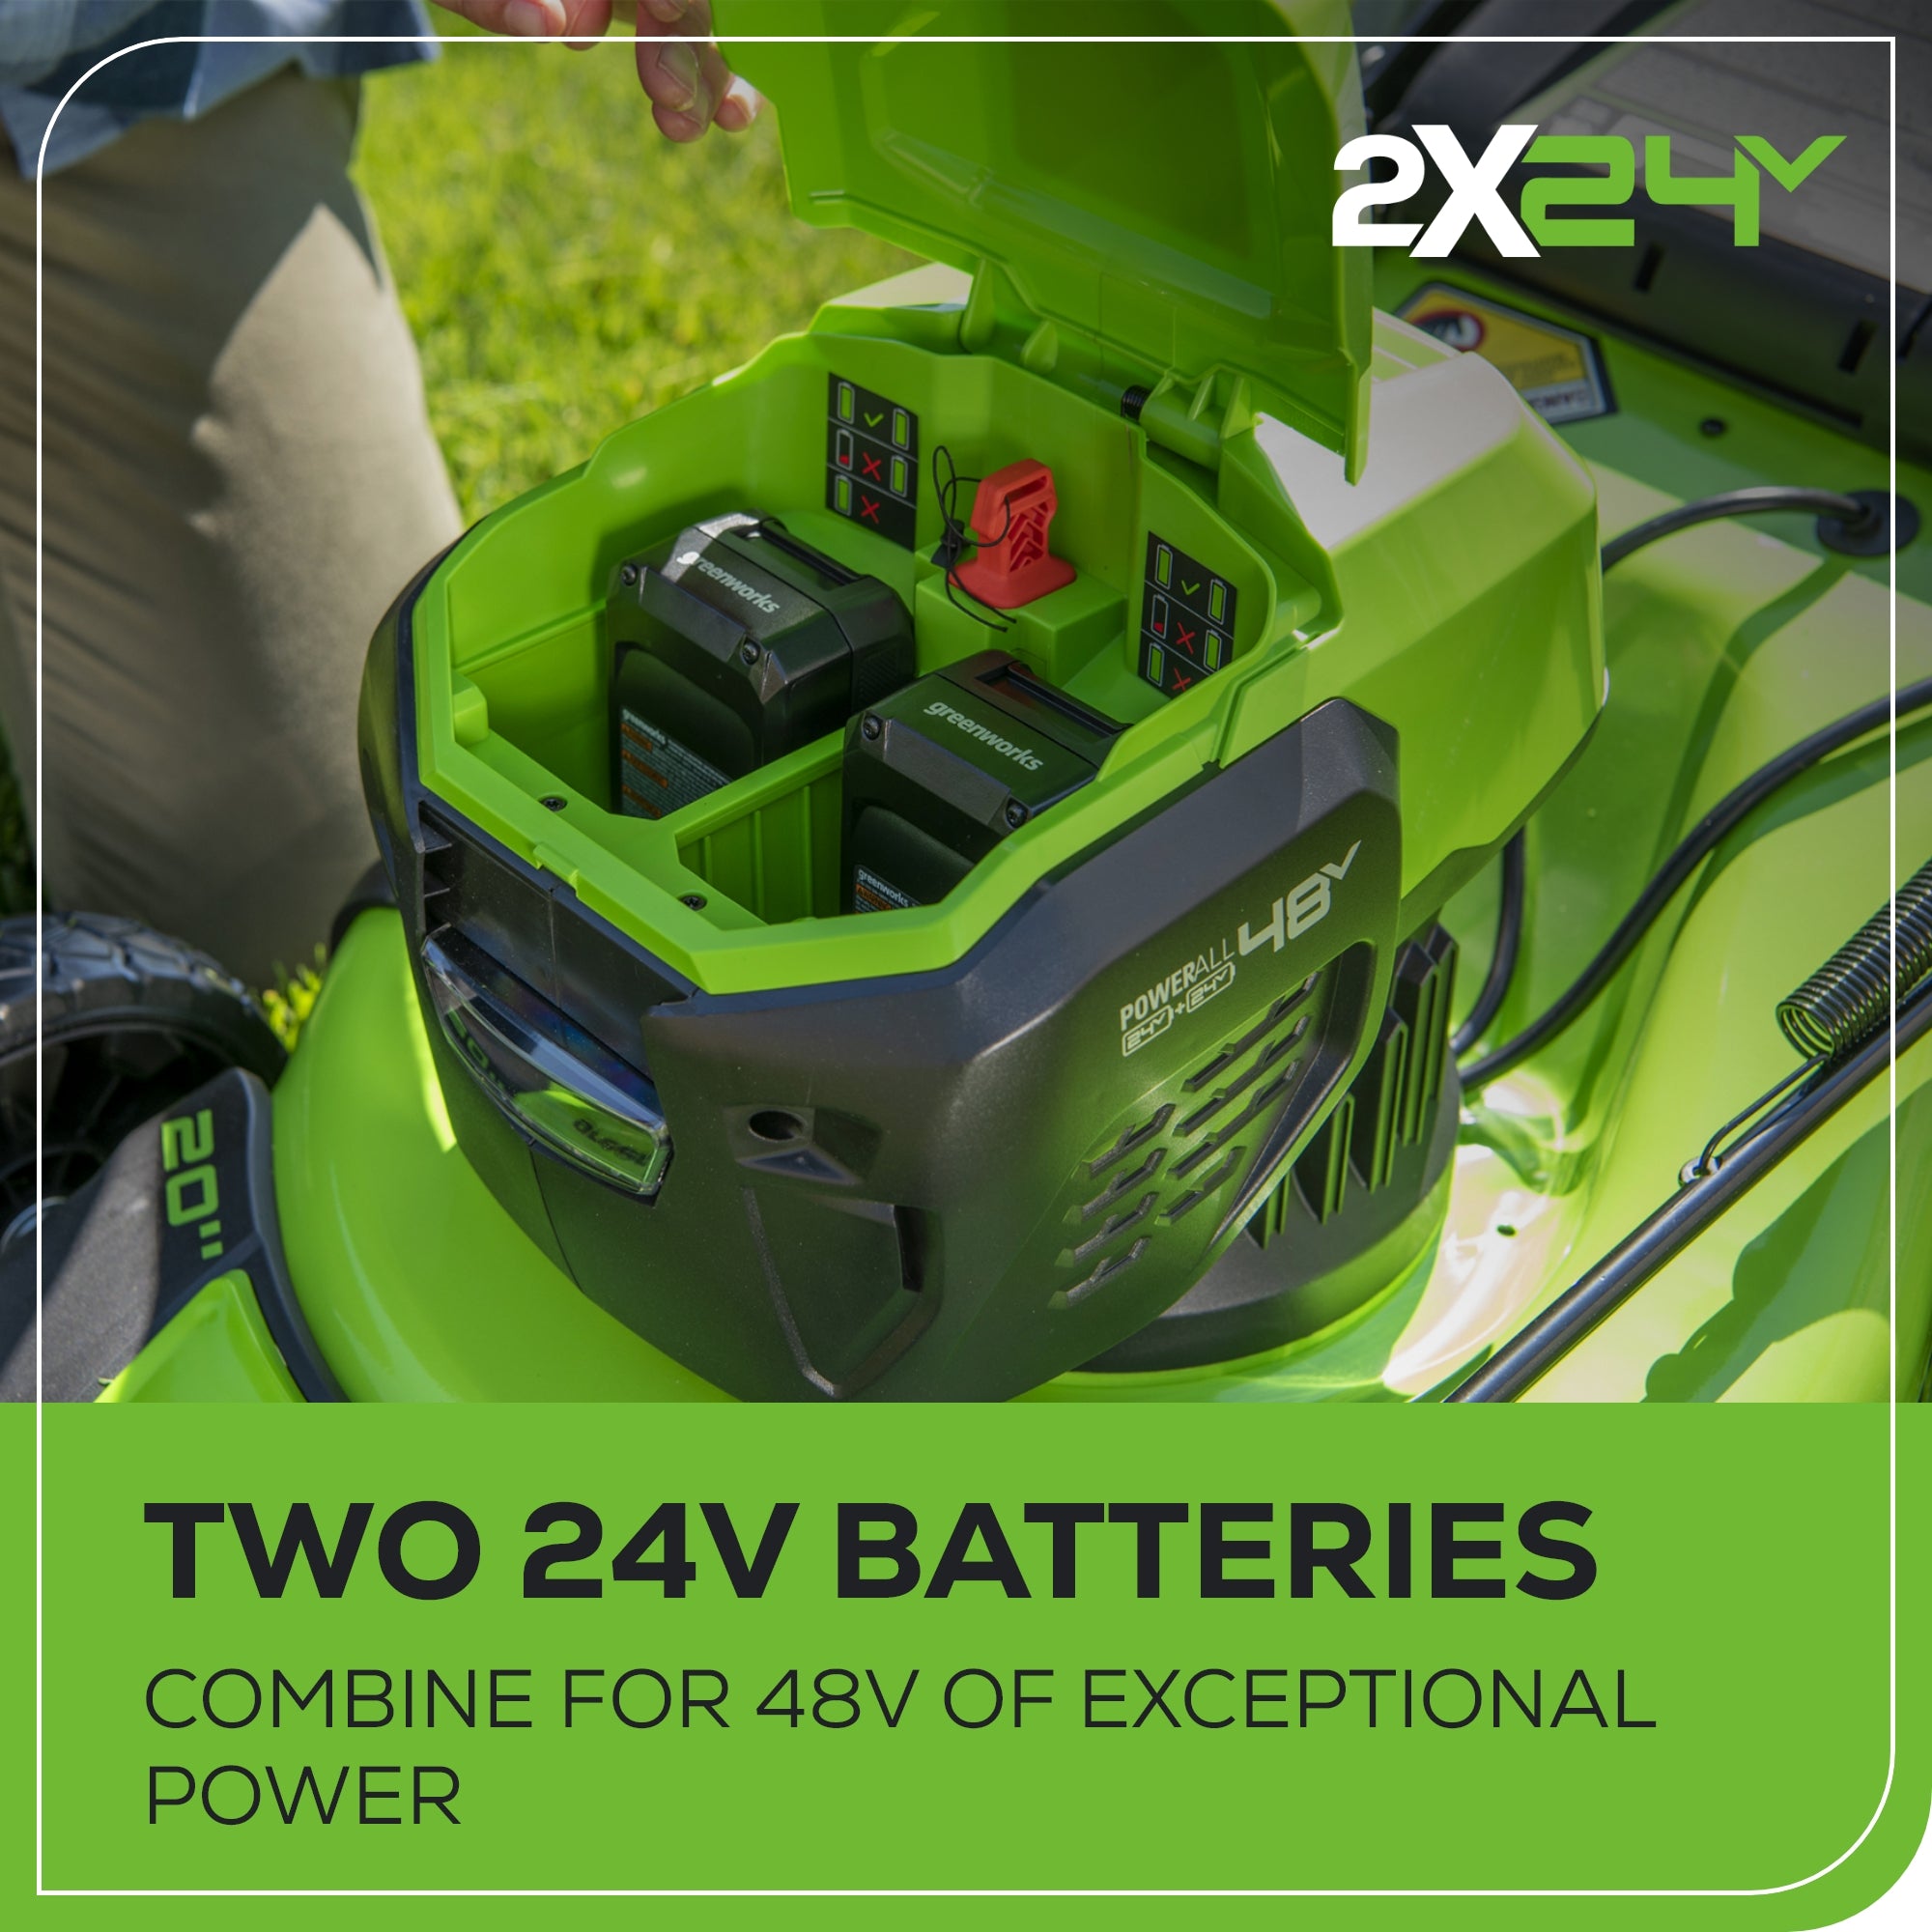 48V (2x24V) 20" Cordless Battery Push Mower, 12" String Trimmer, & 320 CFM Blower Combo Kit w/ (2) 4.0Ah Batteries & Dual Port Chargers